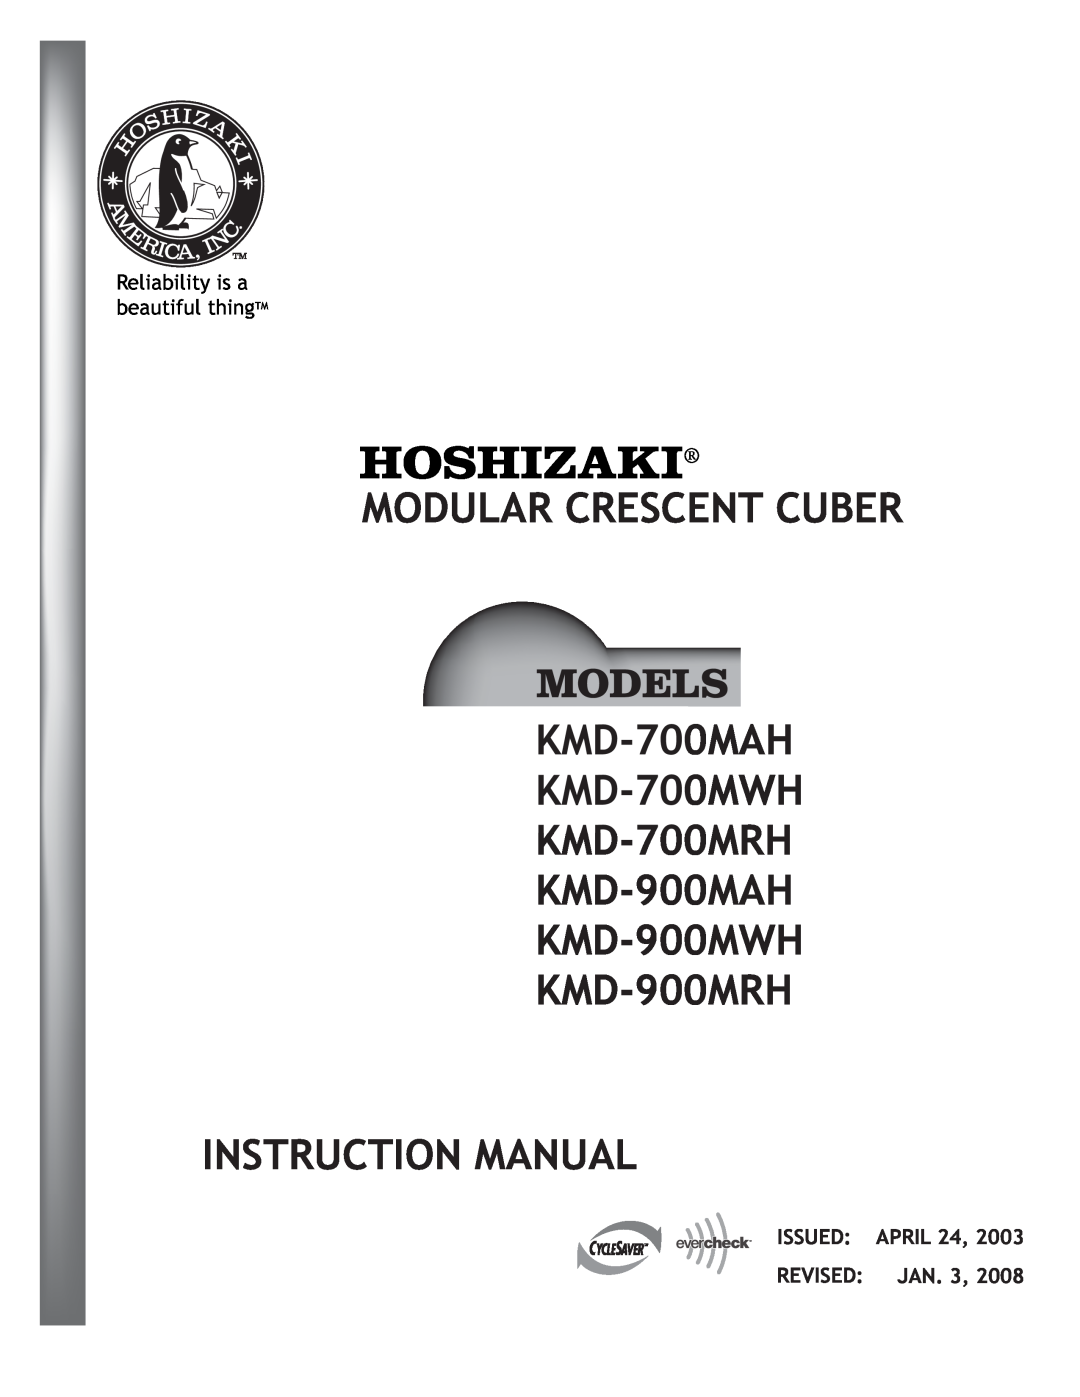 Hoshizaki manual MODULAR CRESCENT CUBER KMD-900MAH KMD-900MWH KMD-900MRH PARTS LIST, Reliability is a beautiful thingTM 